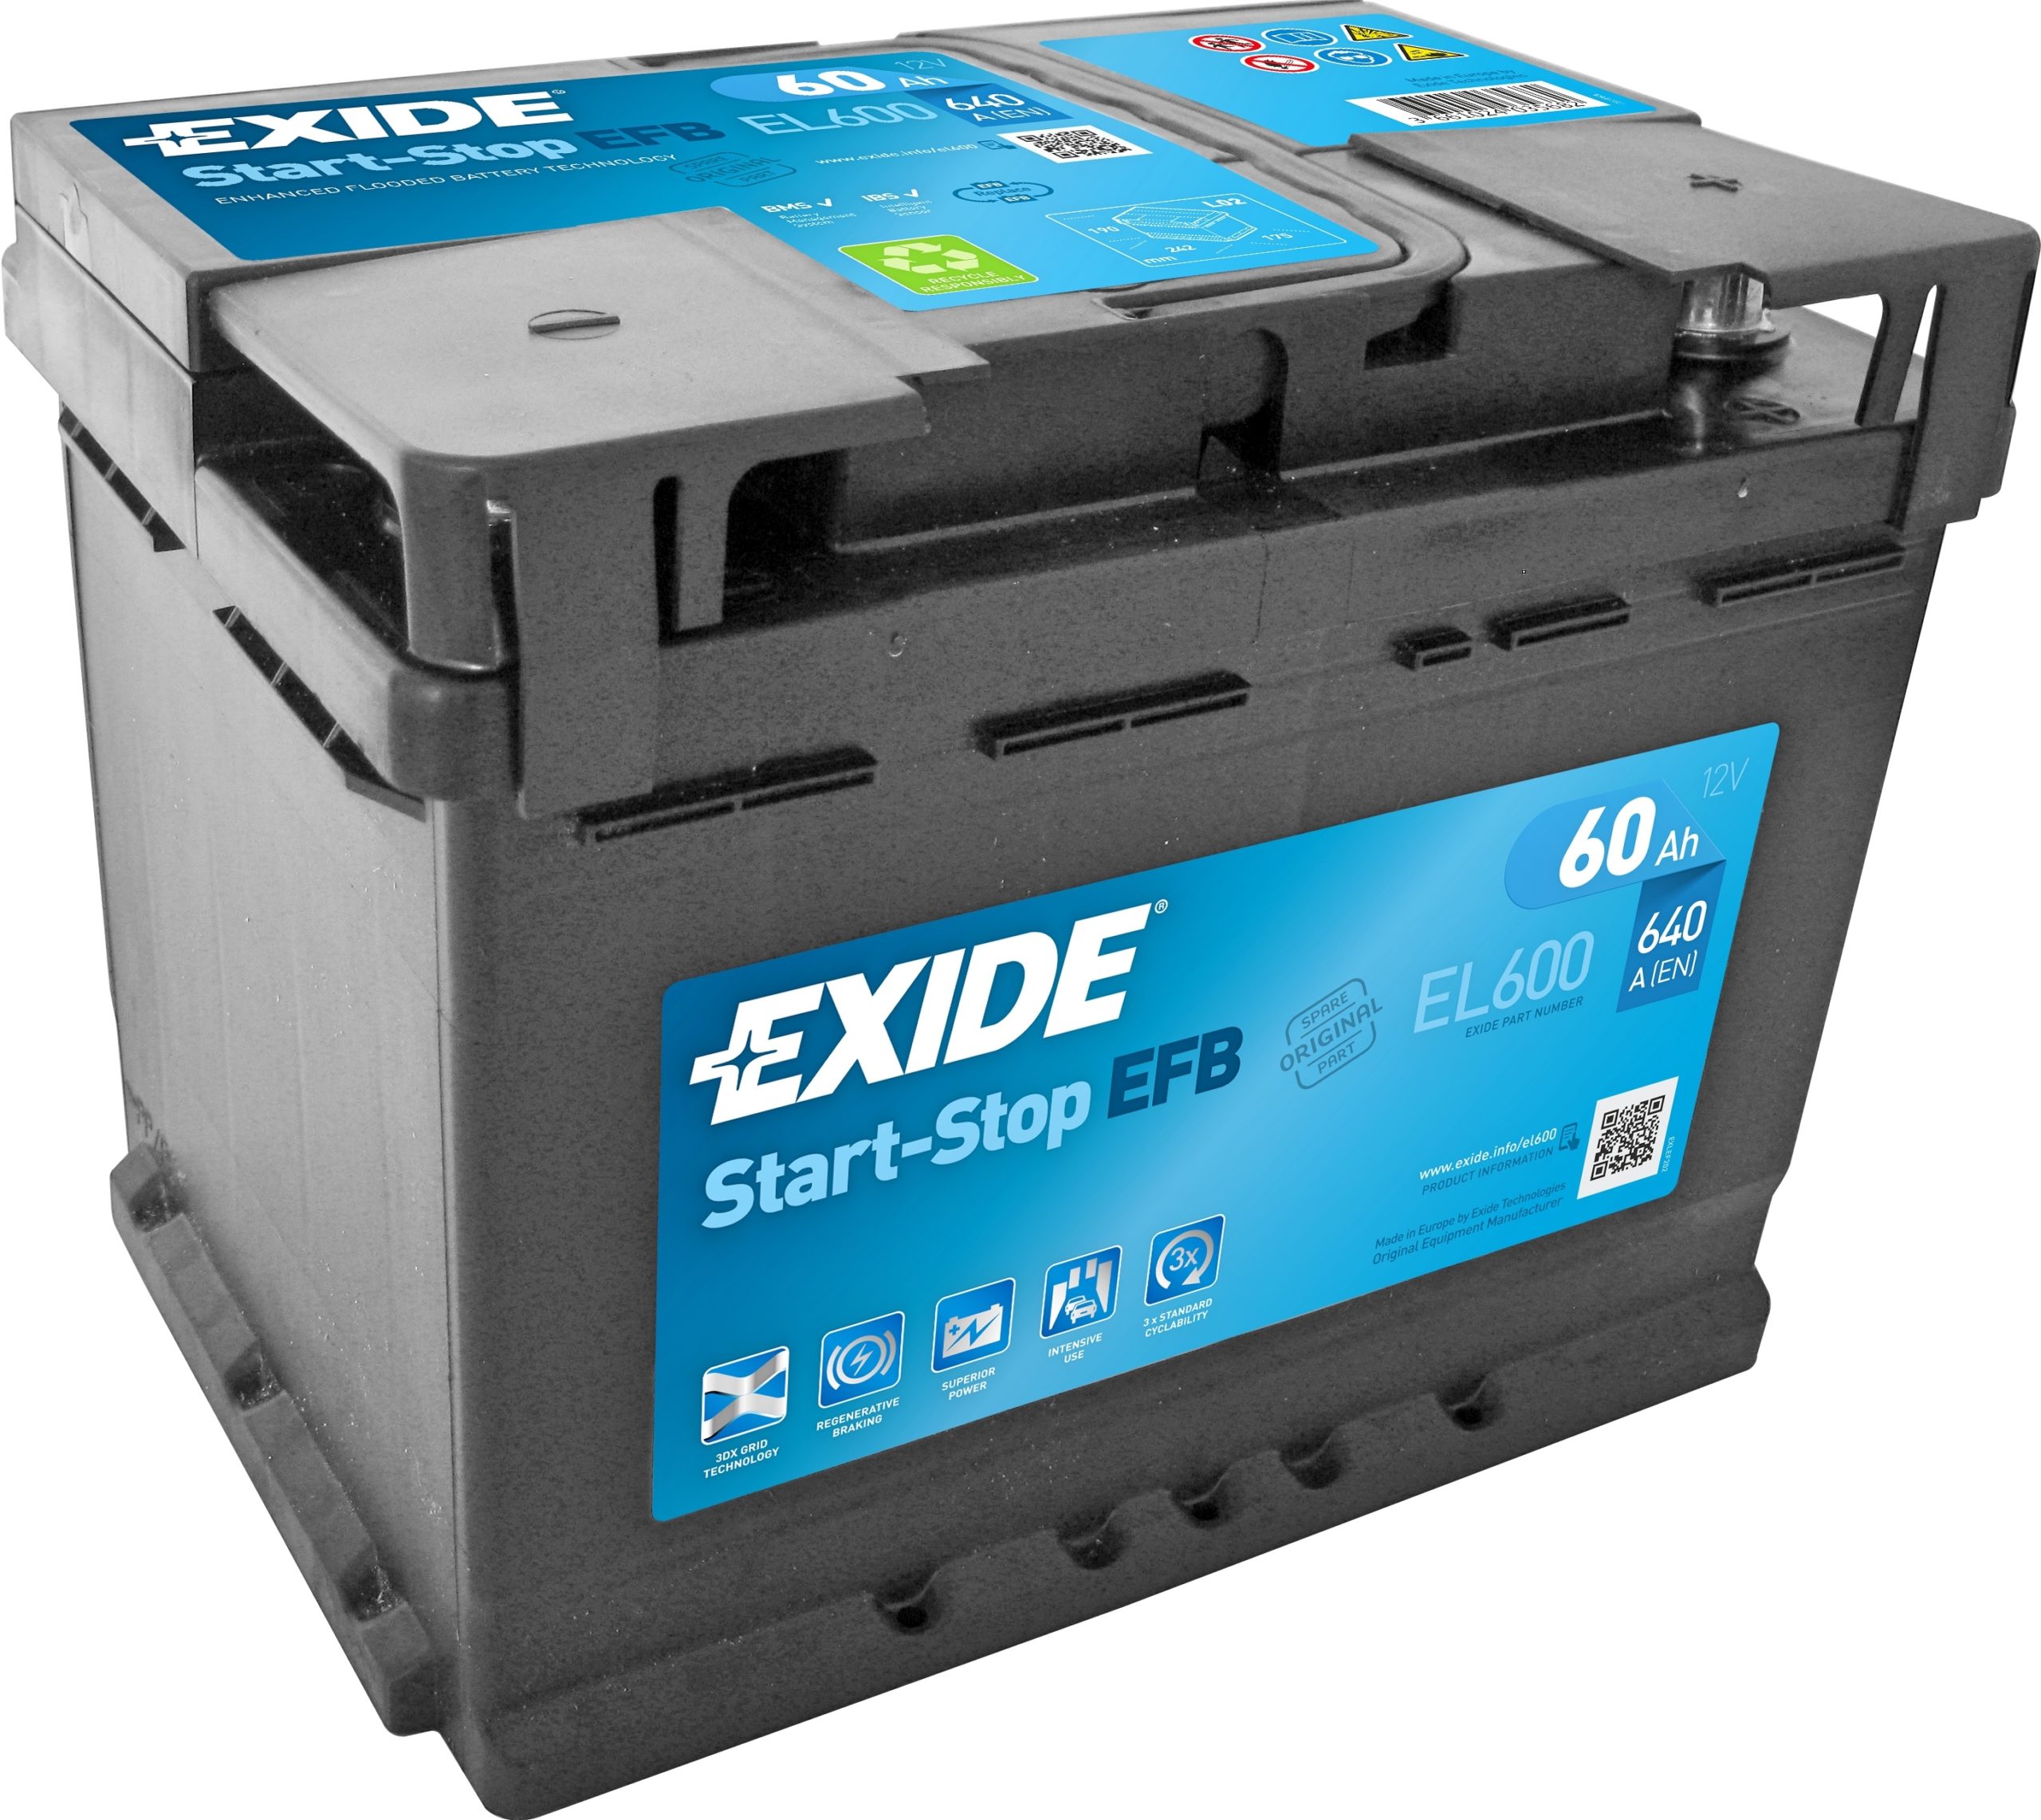 EL600 (027EFB) EXIDE EL600 Start-Stop Batterie 12V 60Ah 640A B13